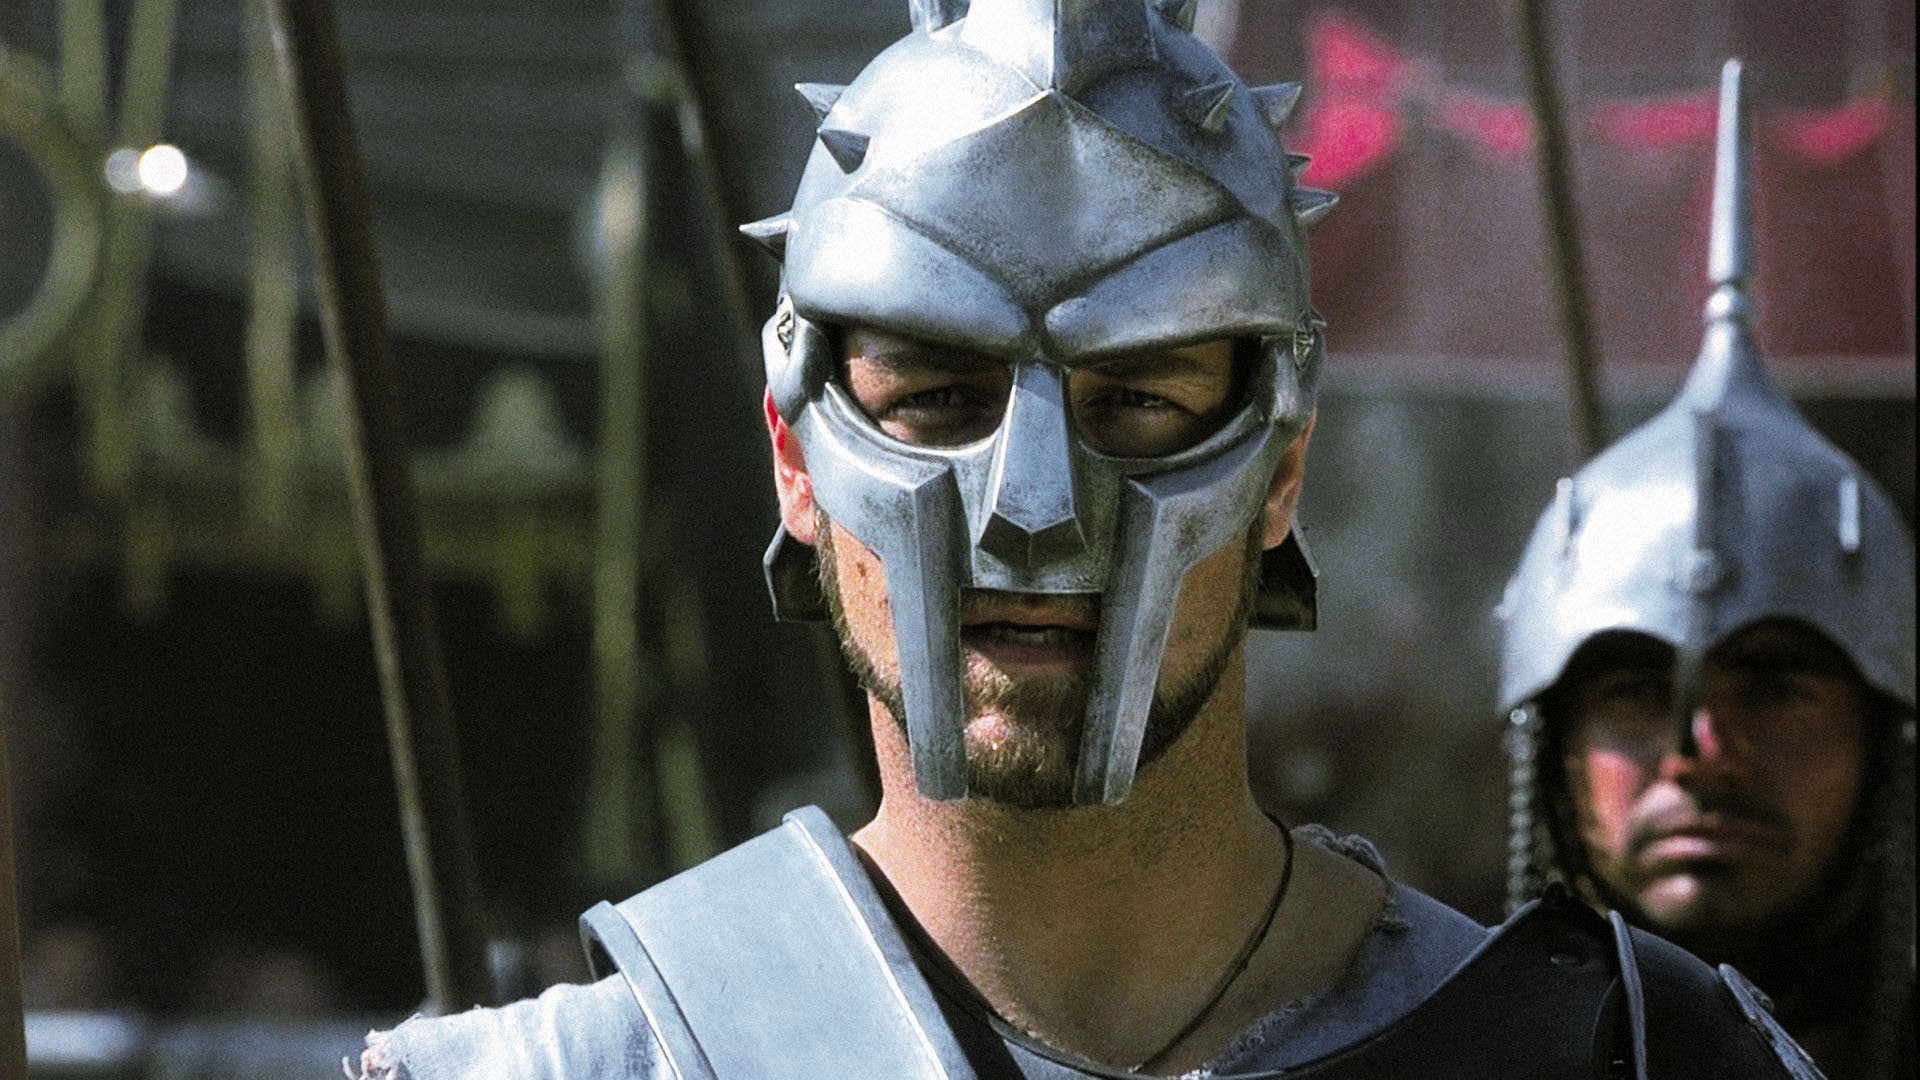 General 1920x1080 movies Gladiator (movie) Russel Crowe actor film stills men helmet